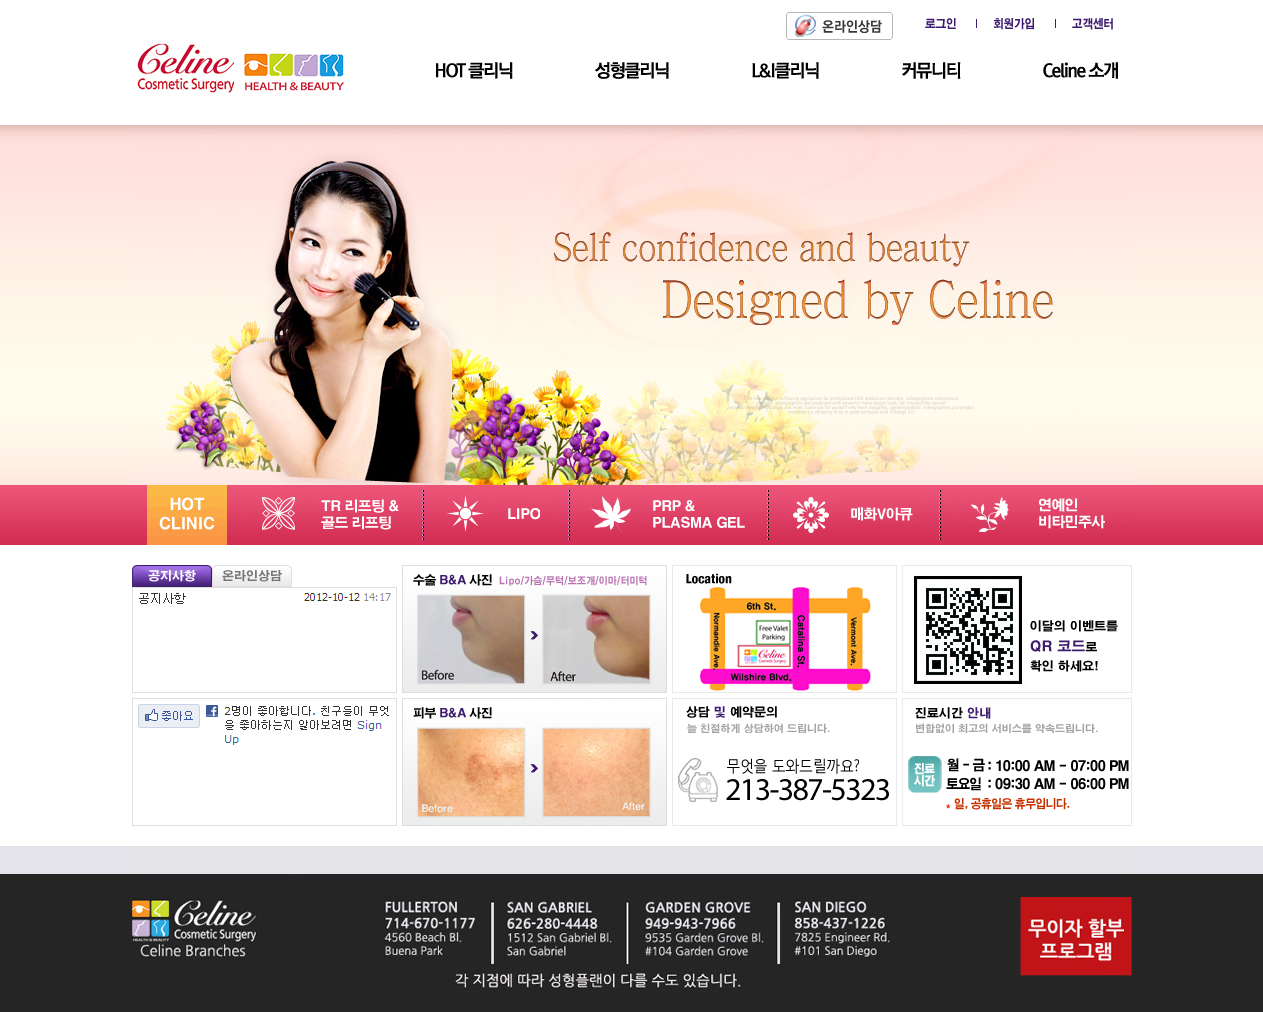 FireShot Screen Capture #224 - 'Celine Cosmetic Surgery' - celinecs_com_home.png